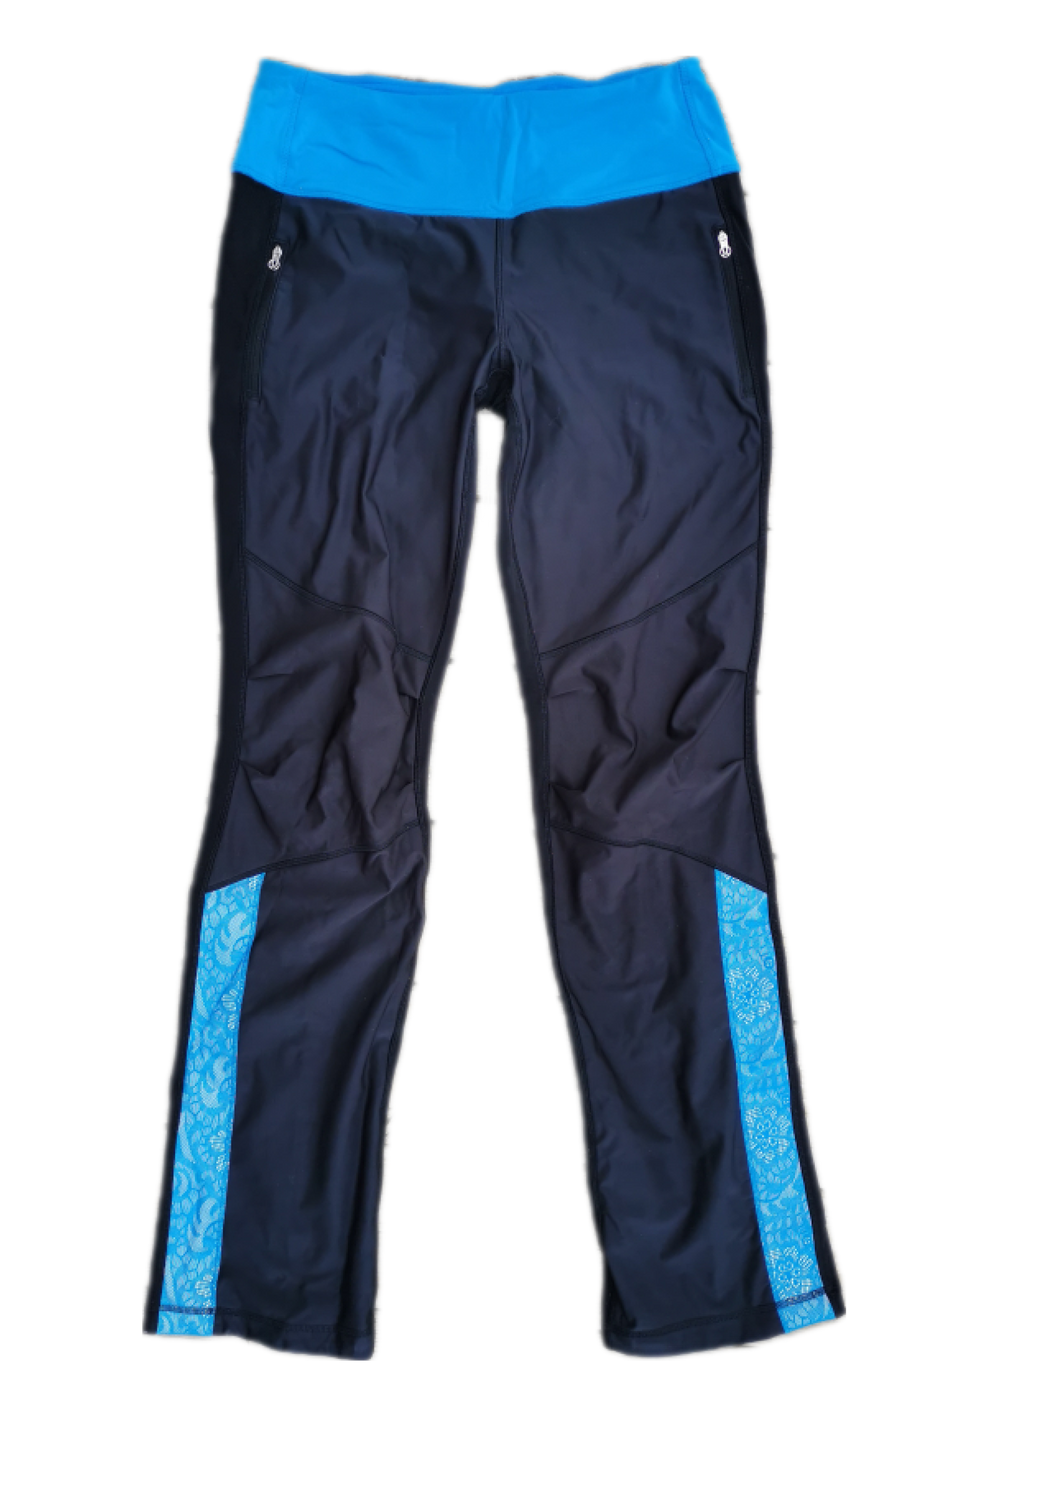 Pantalon sport gr 8 small-médium Lululemon (C:MEB)